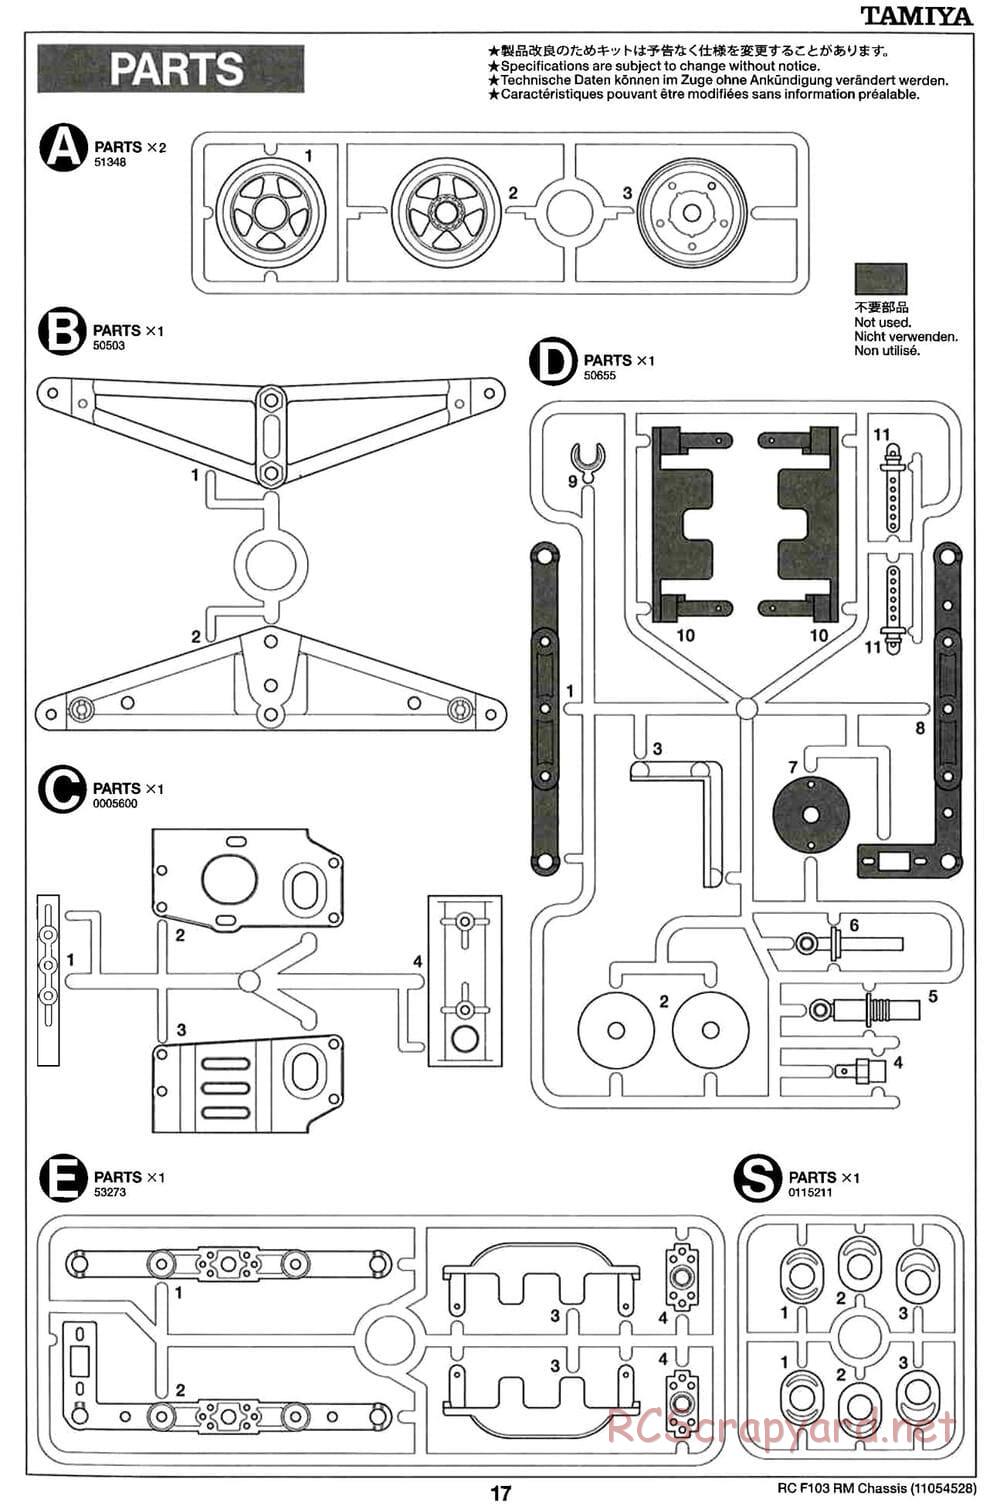 Tamiya - F103RM Chassis - Manual - Page 17